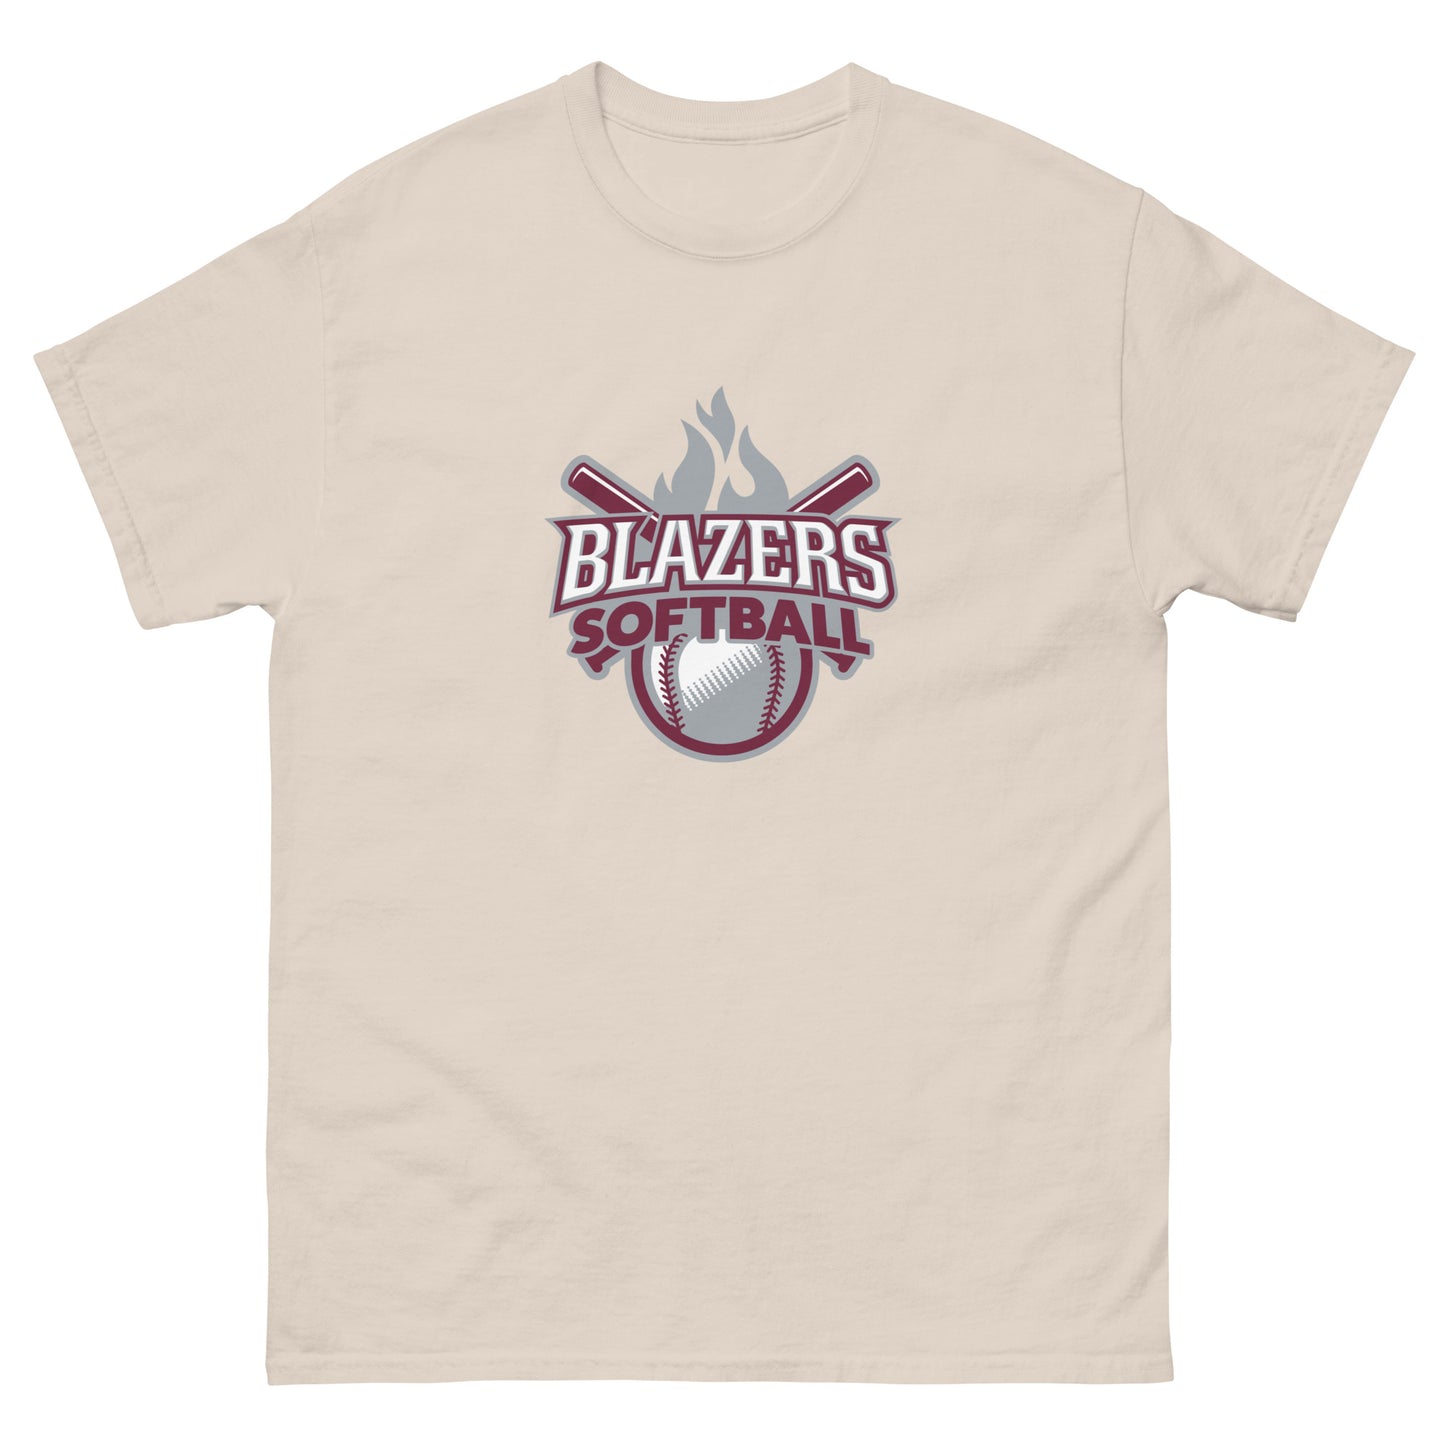 Blazers Softball Unisex Short-Sleeve T-Shirt (Gildan)